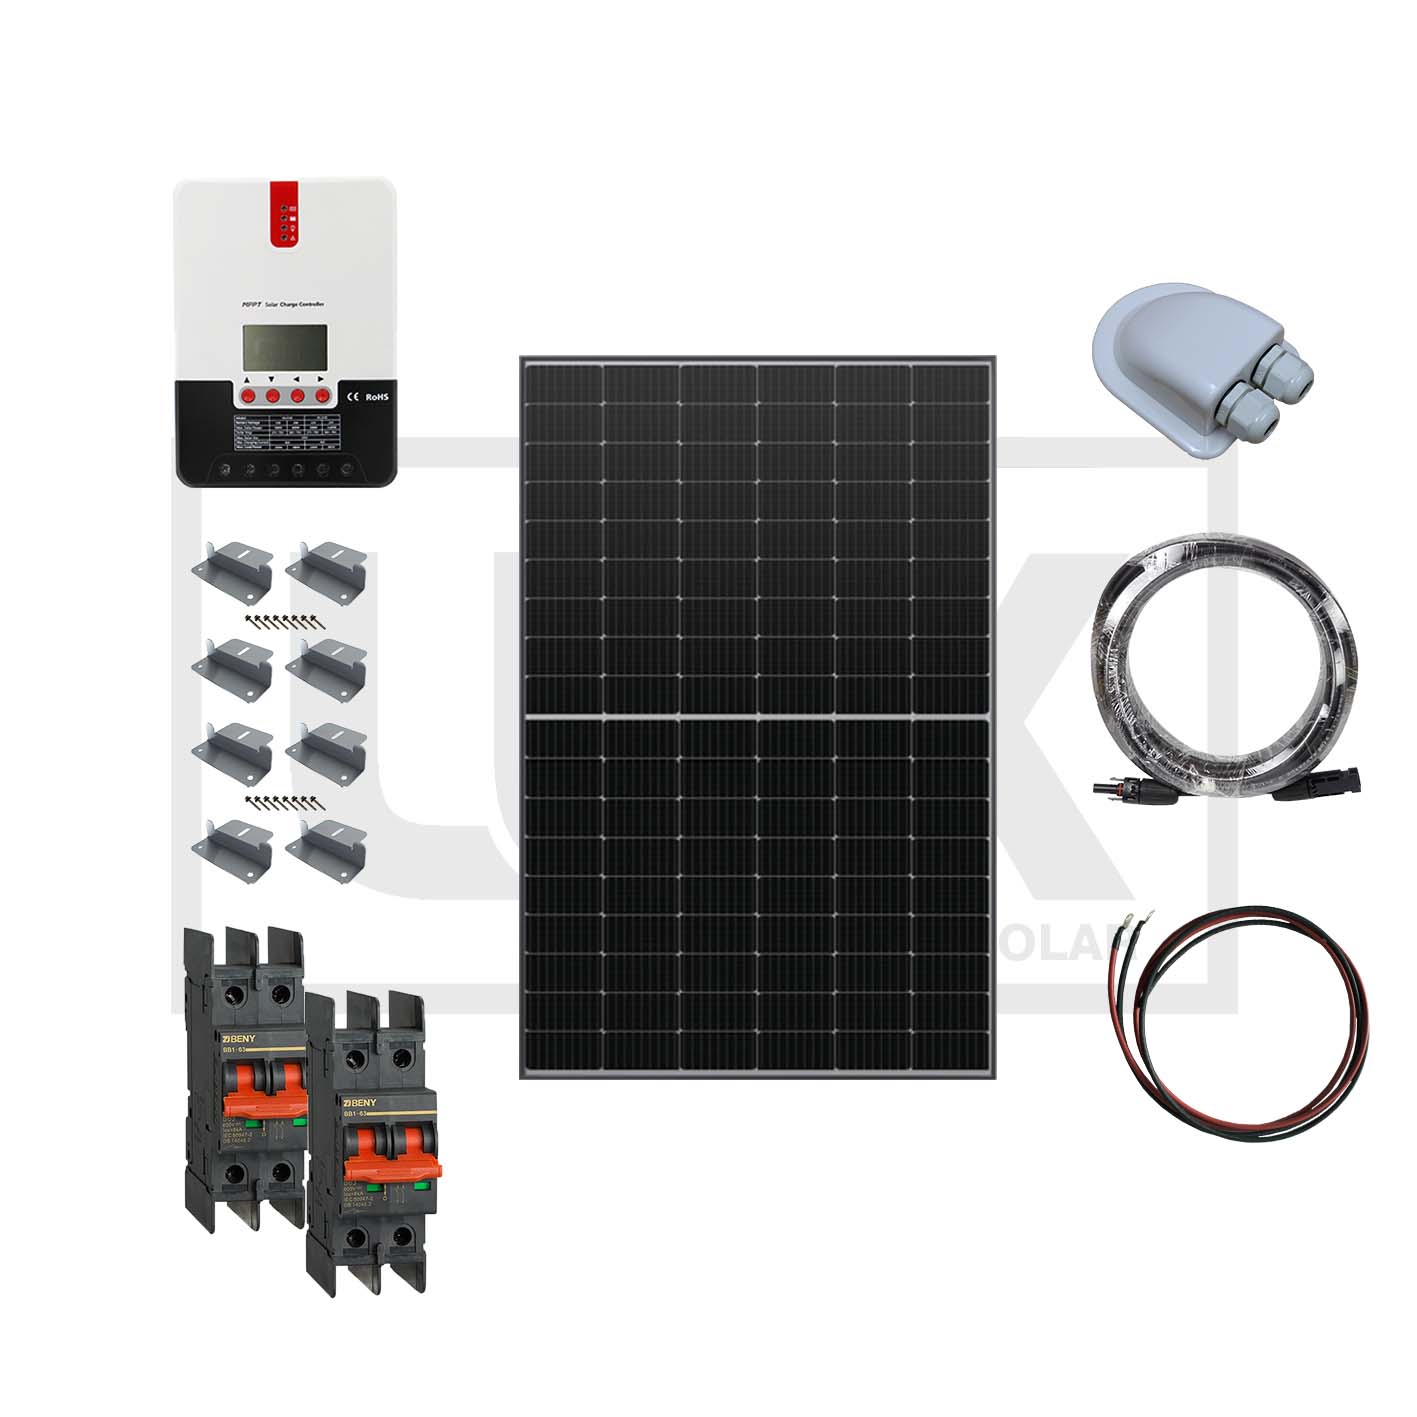 Motorhome, Boat, Campervan, Caravan Solar Kits  DIY Installable off-grid solar kits Upgradable to Victron  100 to 840 Watt